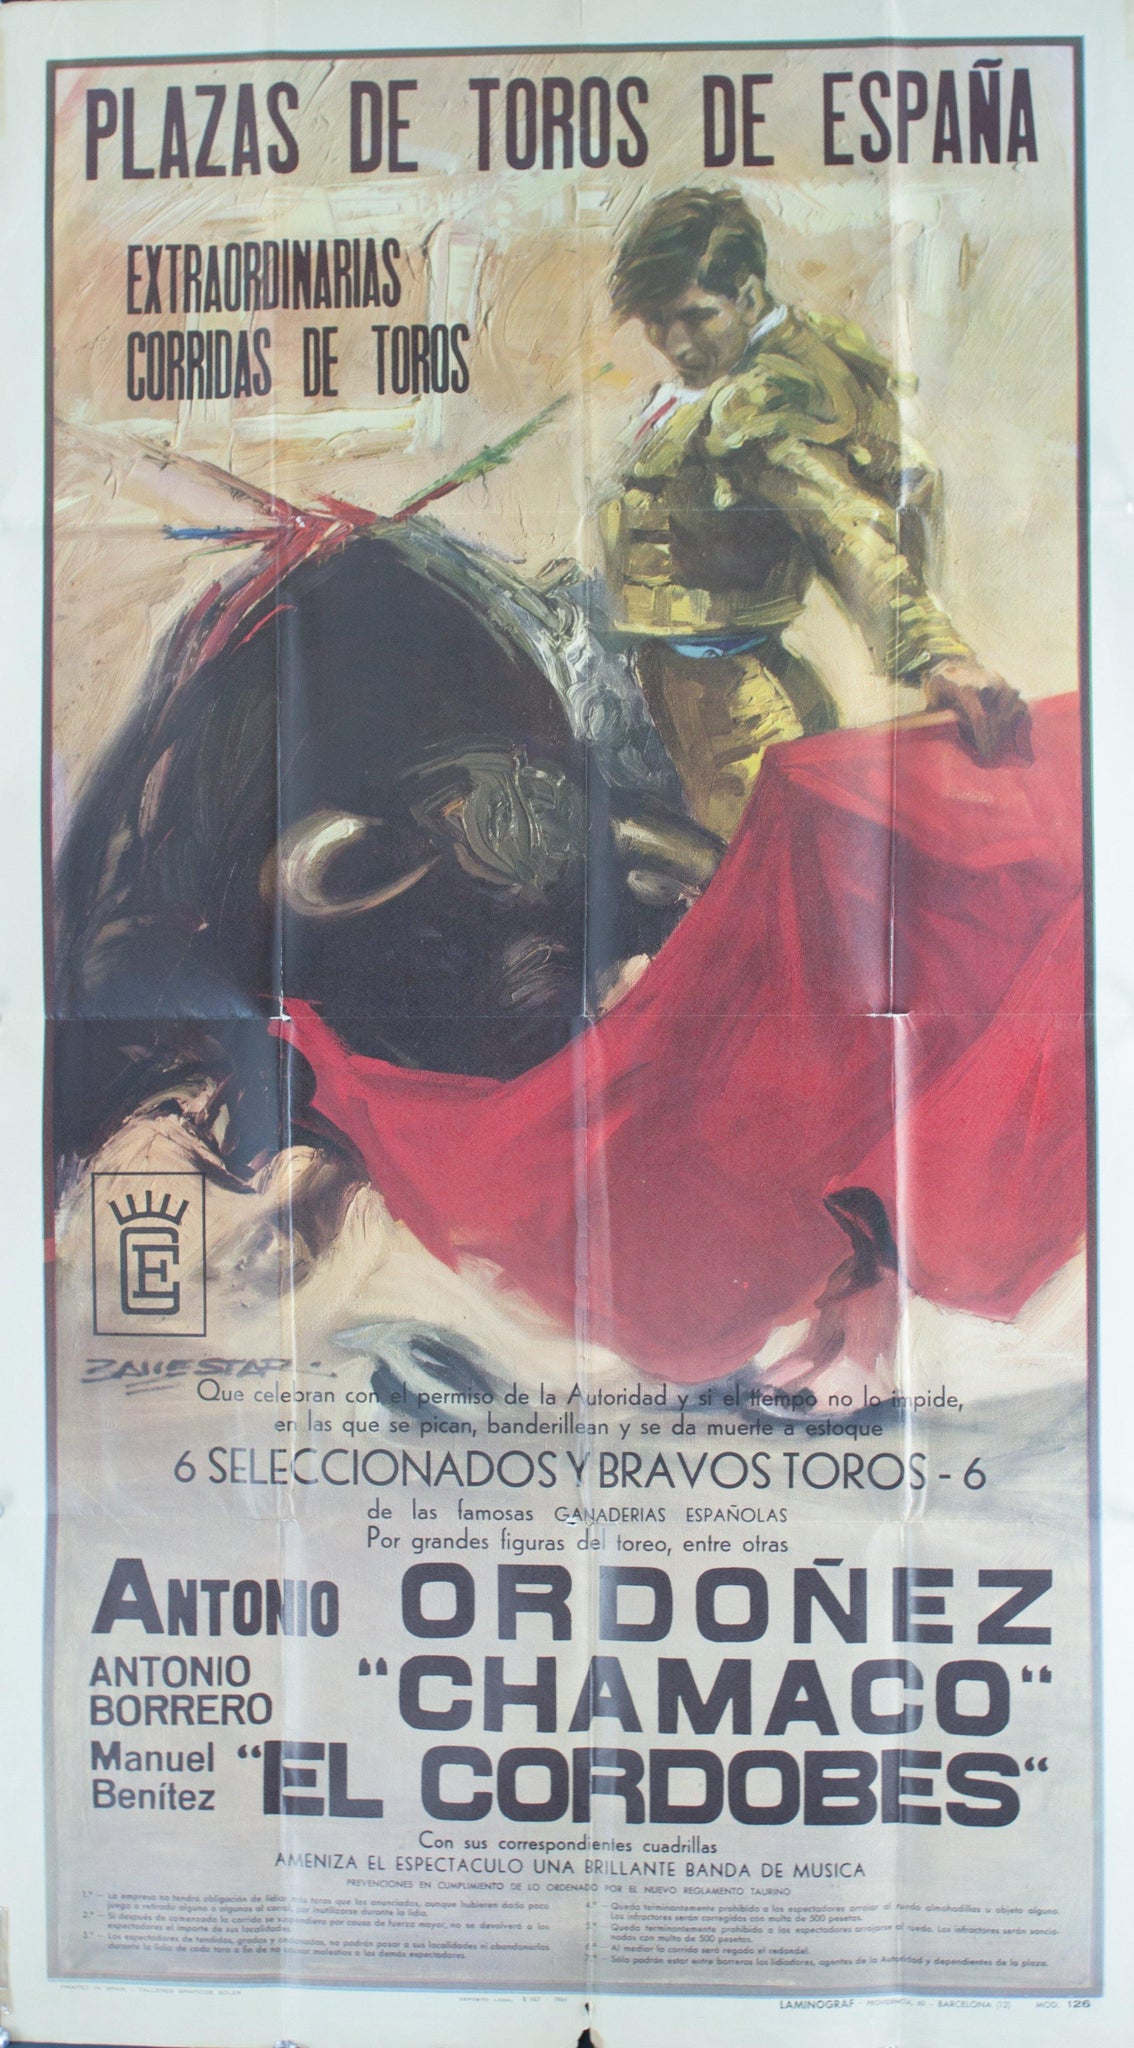 1960 Plaza de Toros de Espana | Extraordinarias Corridas de Toros - Golden Age Posters